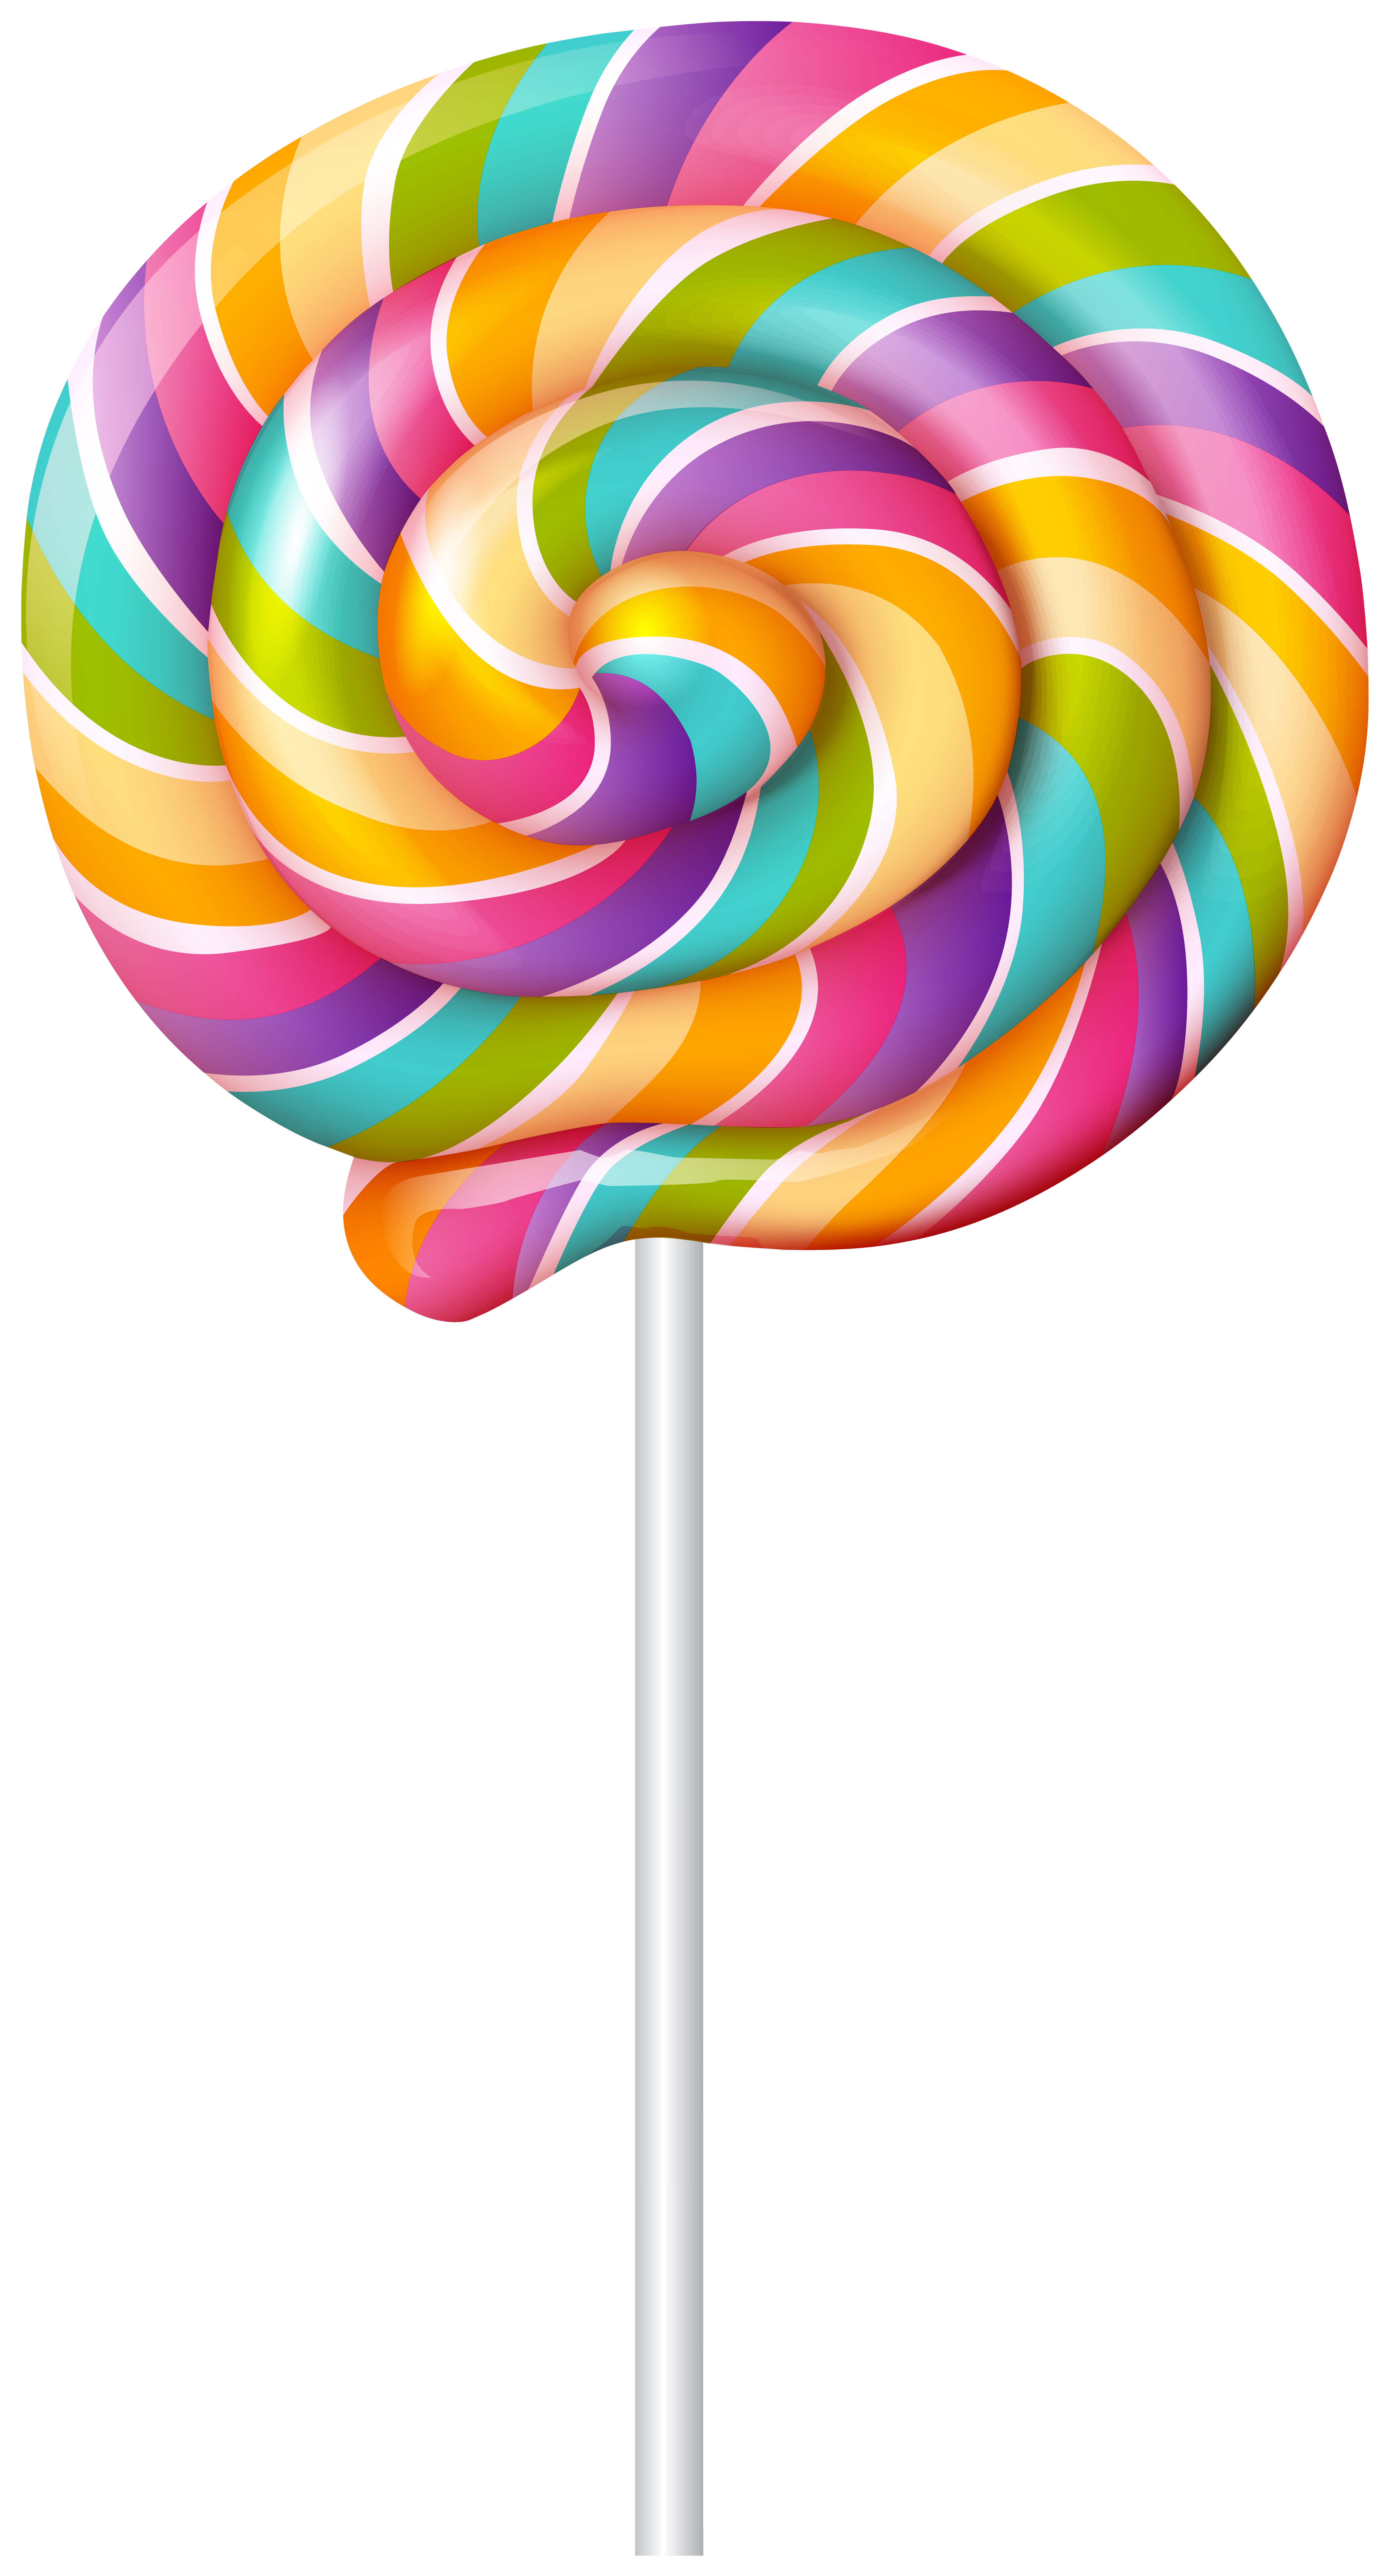 Free Lollipop Cliparts, Download Free Lollipop Cliparts png images